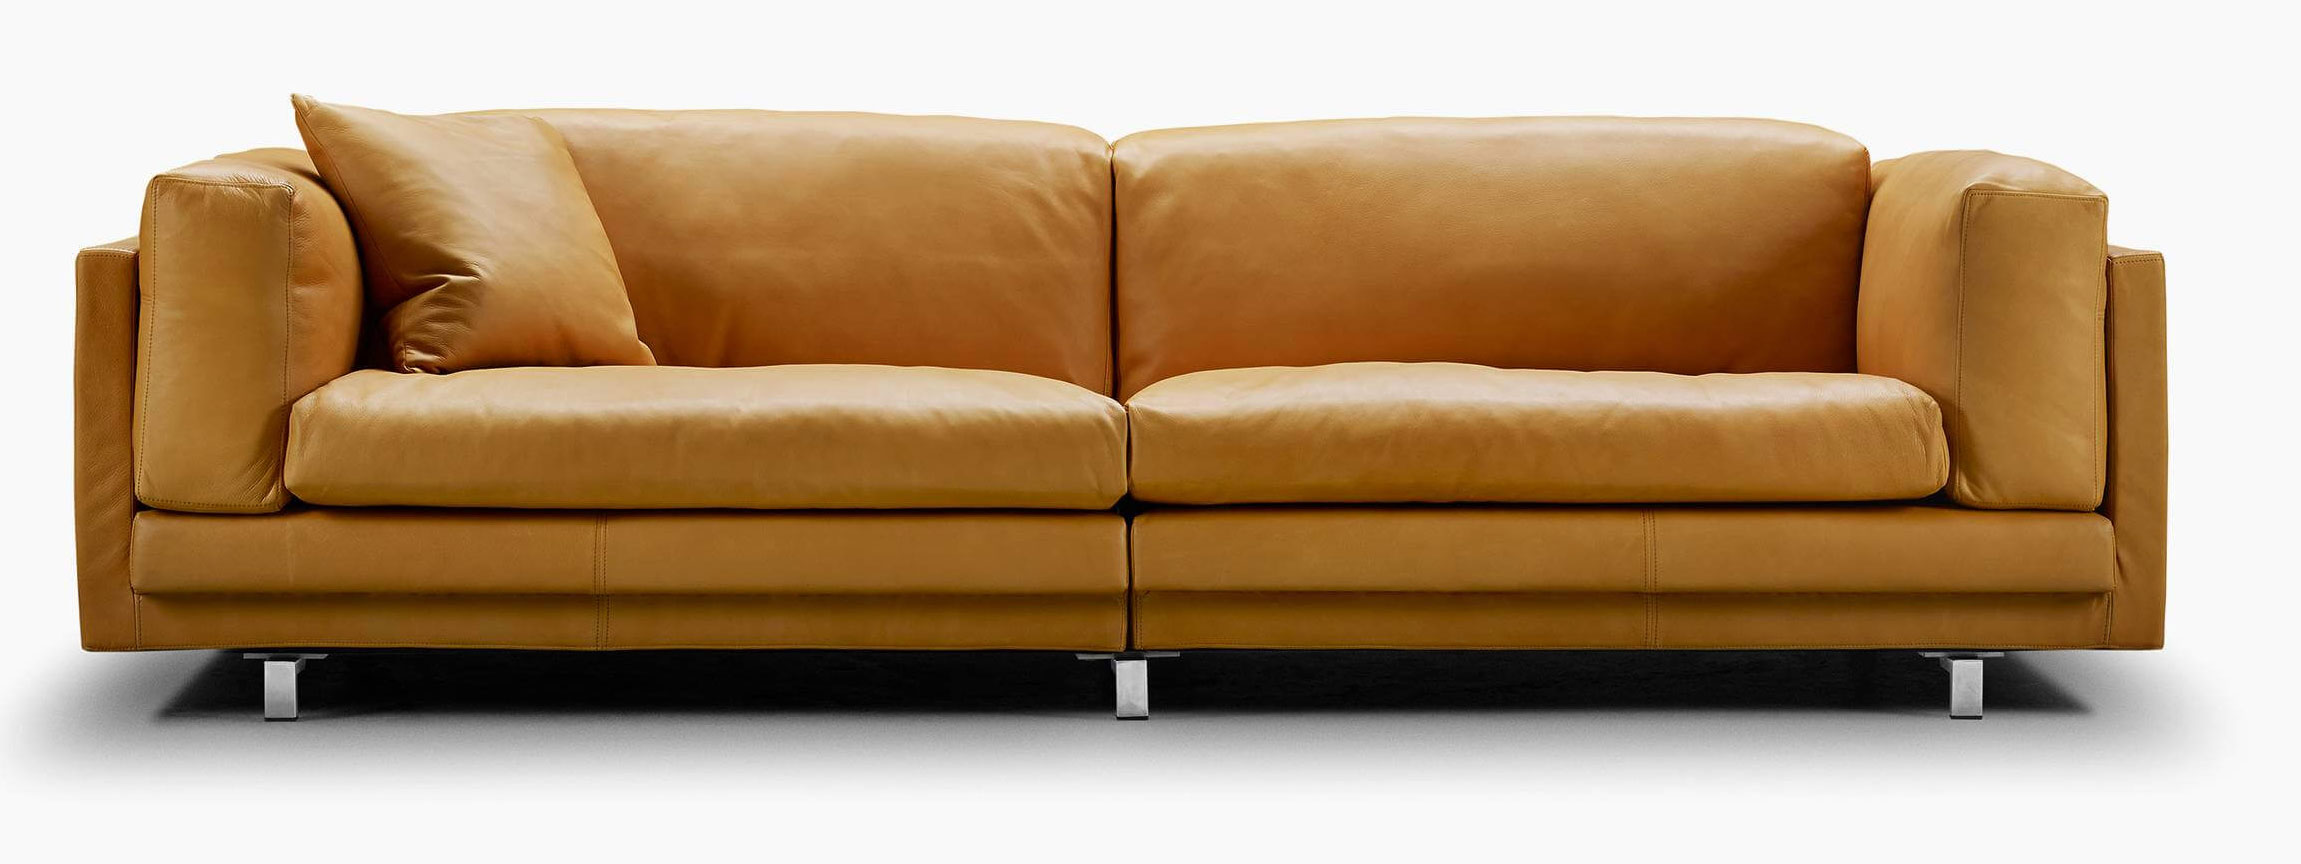 Ny sofa: Her er 30 - ALT.dk